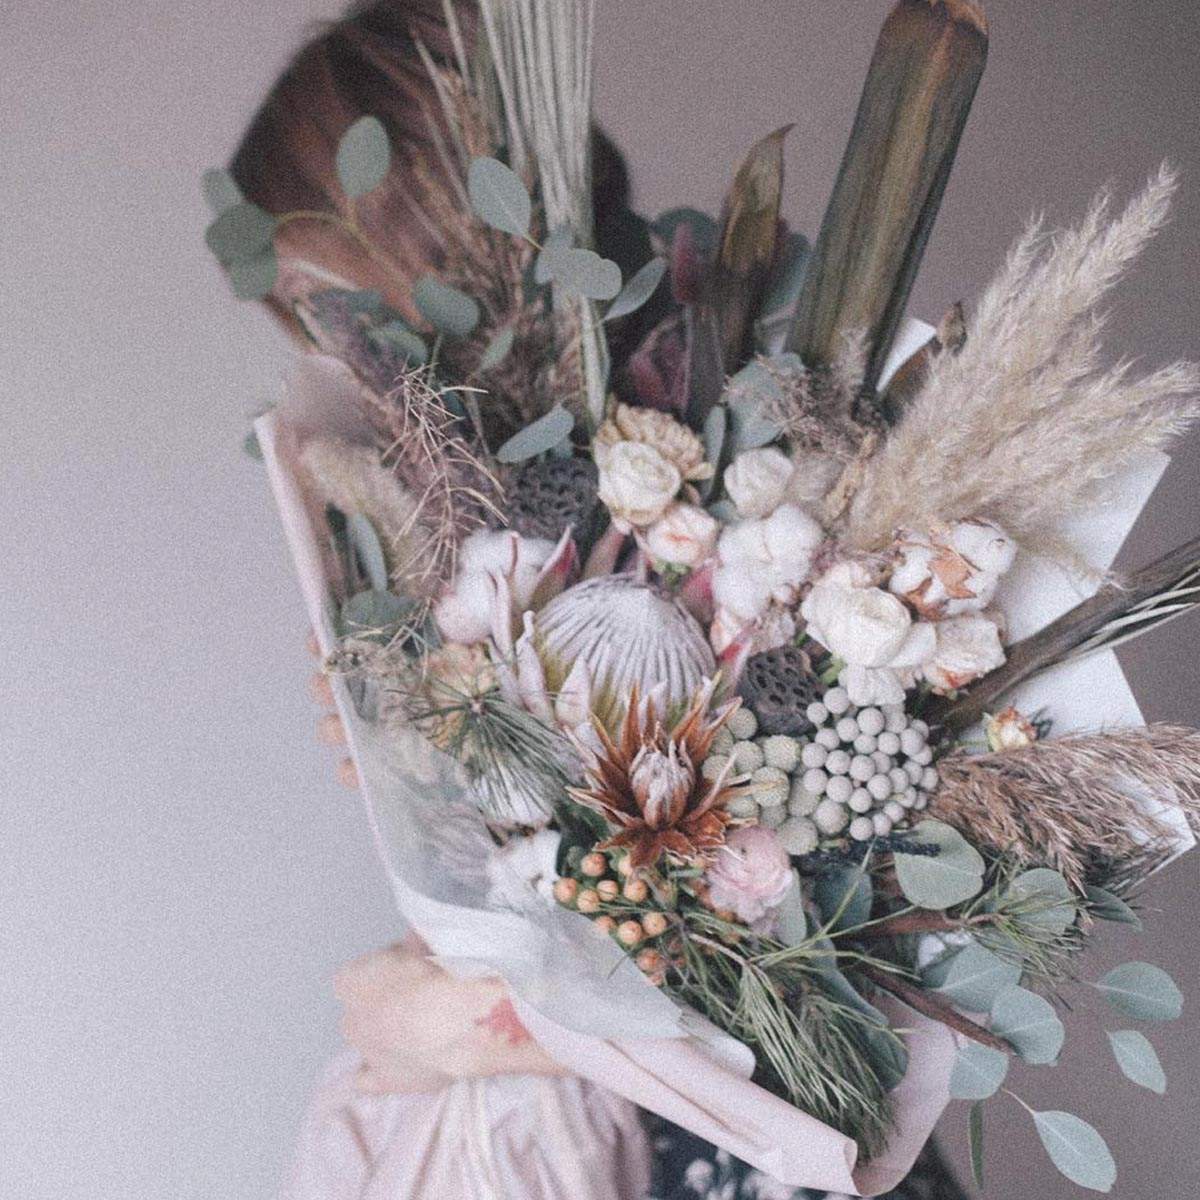 lis_floral_agency_florists_on_thursd_featured